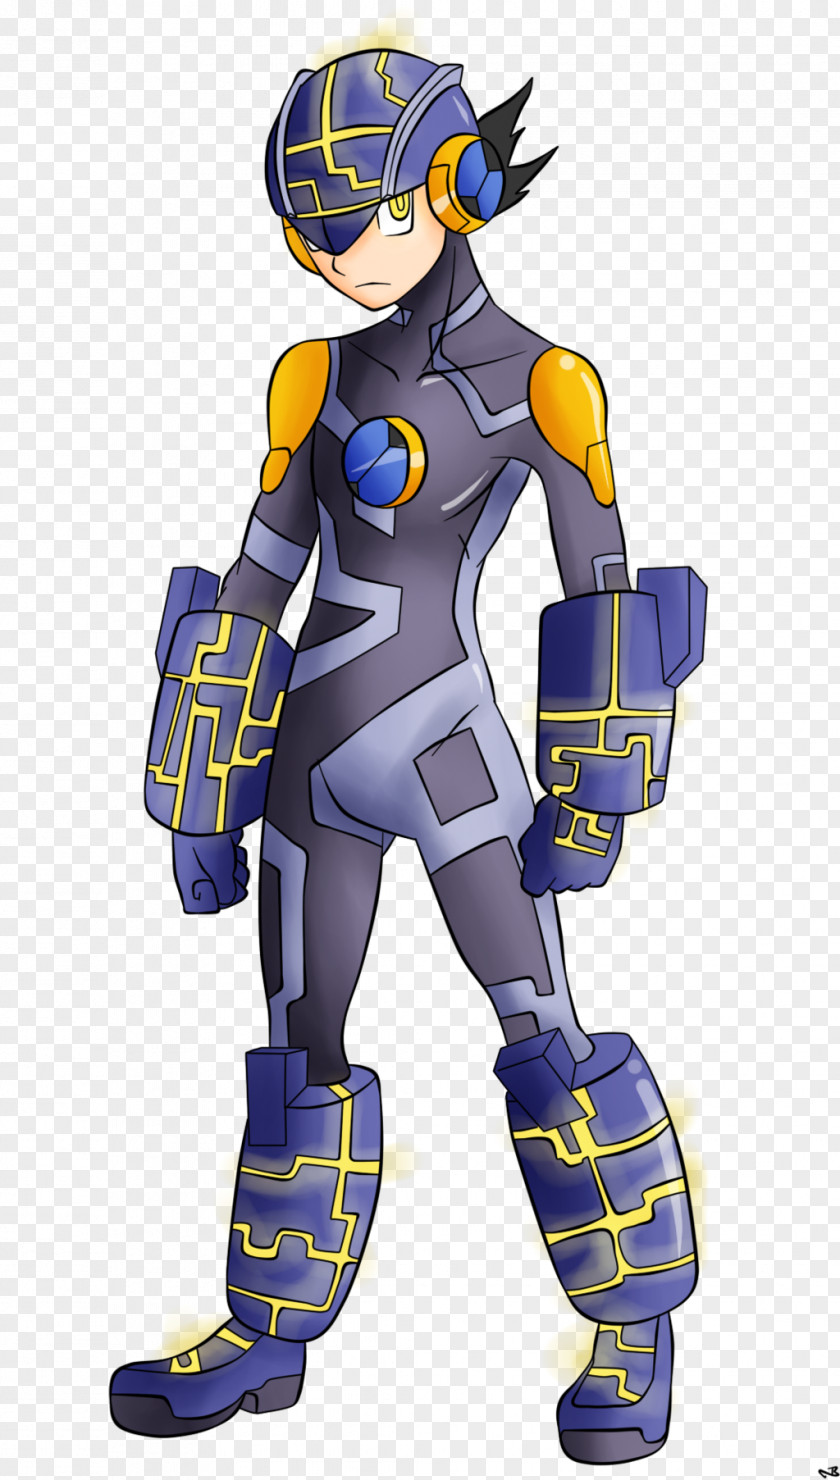 Mega Man X8 Star Force Proto PNG